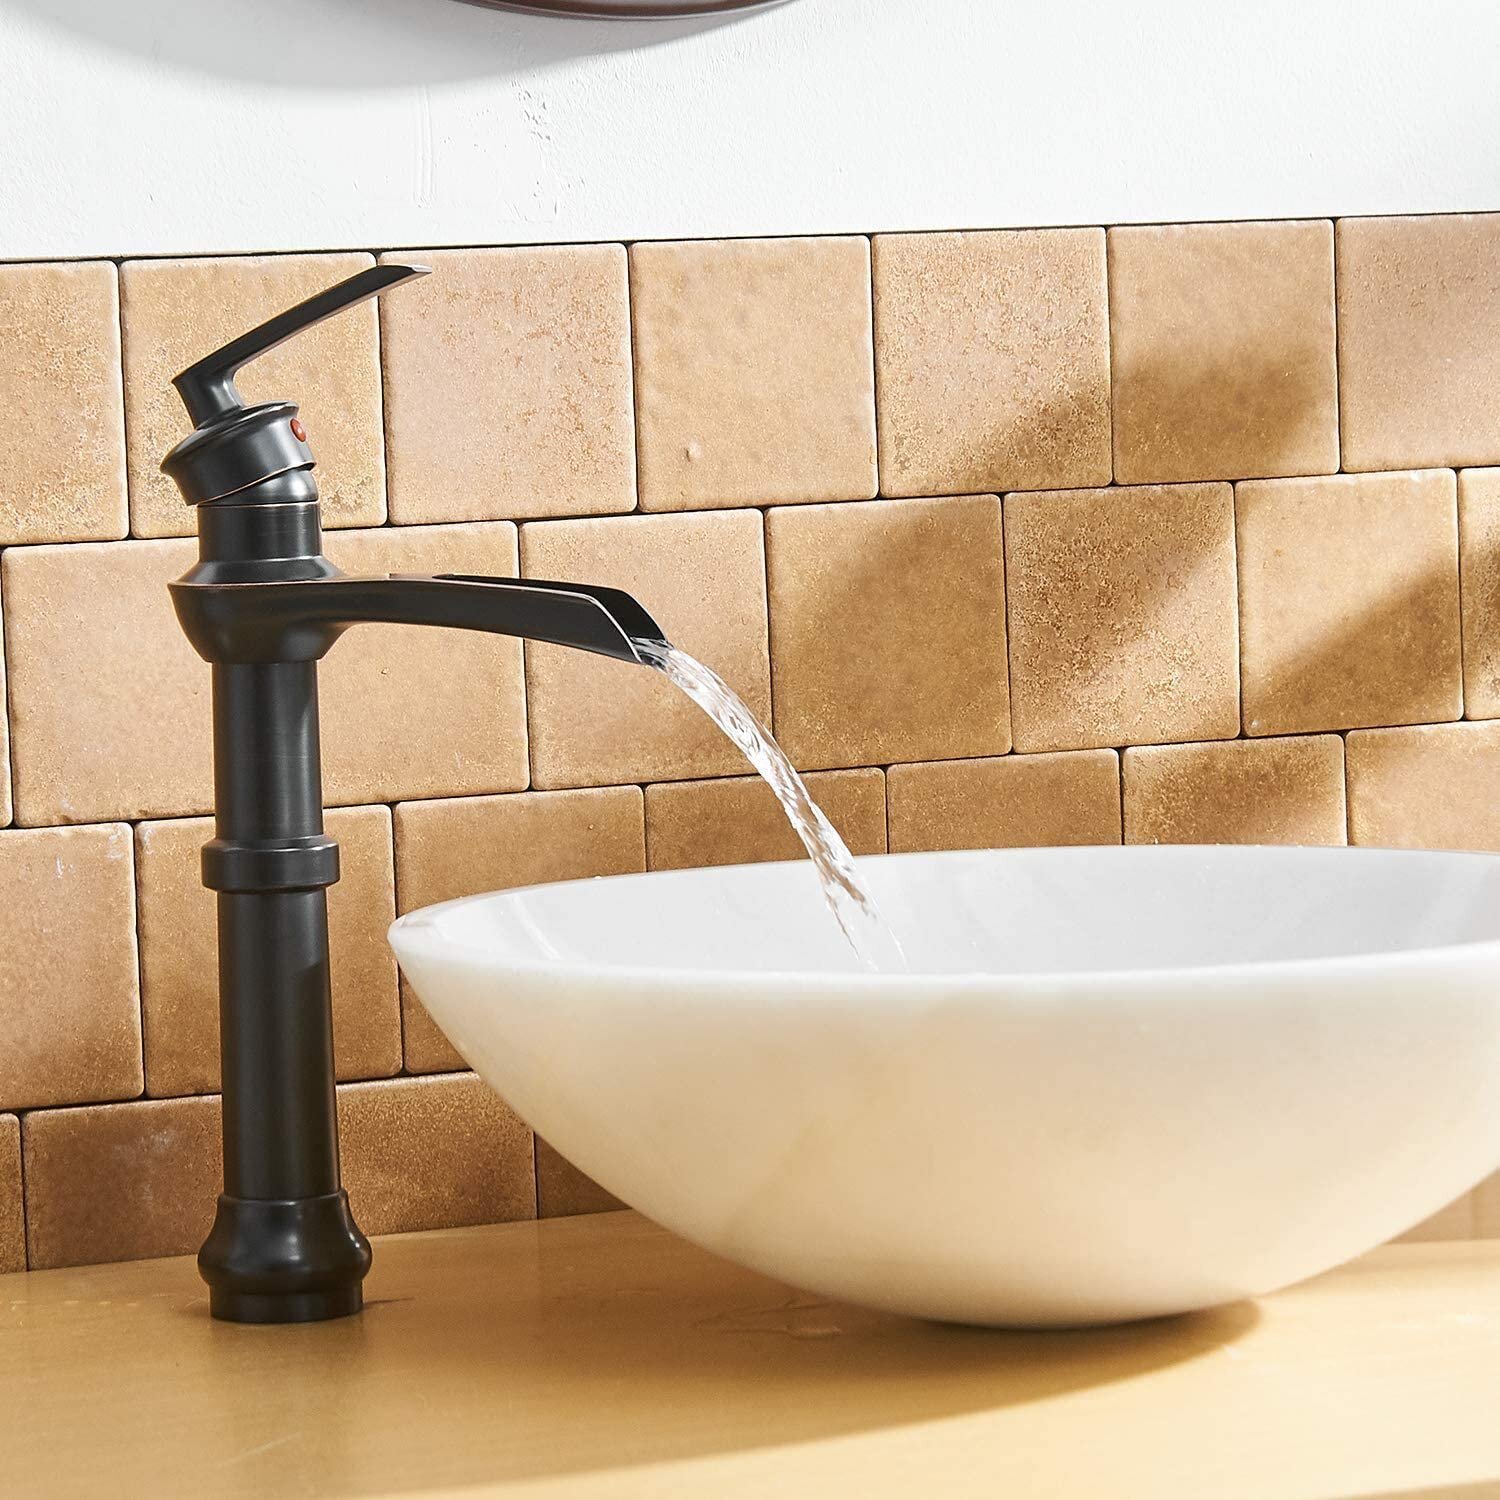 Bathroom/Kitchen Sink Vessel Faucet Oil Rubbed Bronze Waterfall Basin Mixer Tap